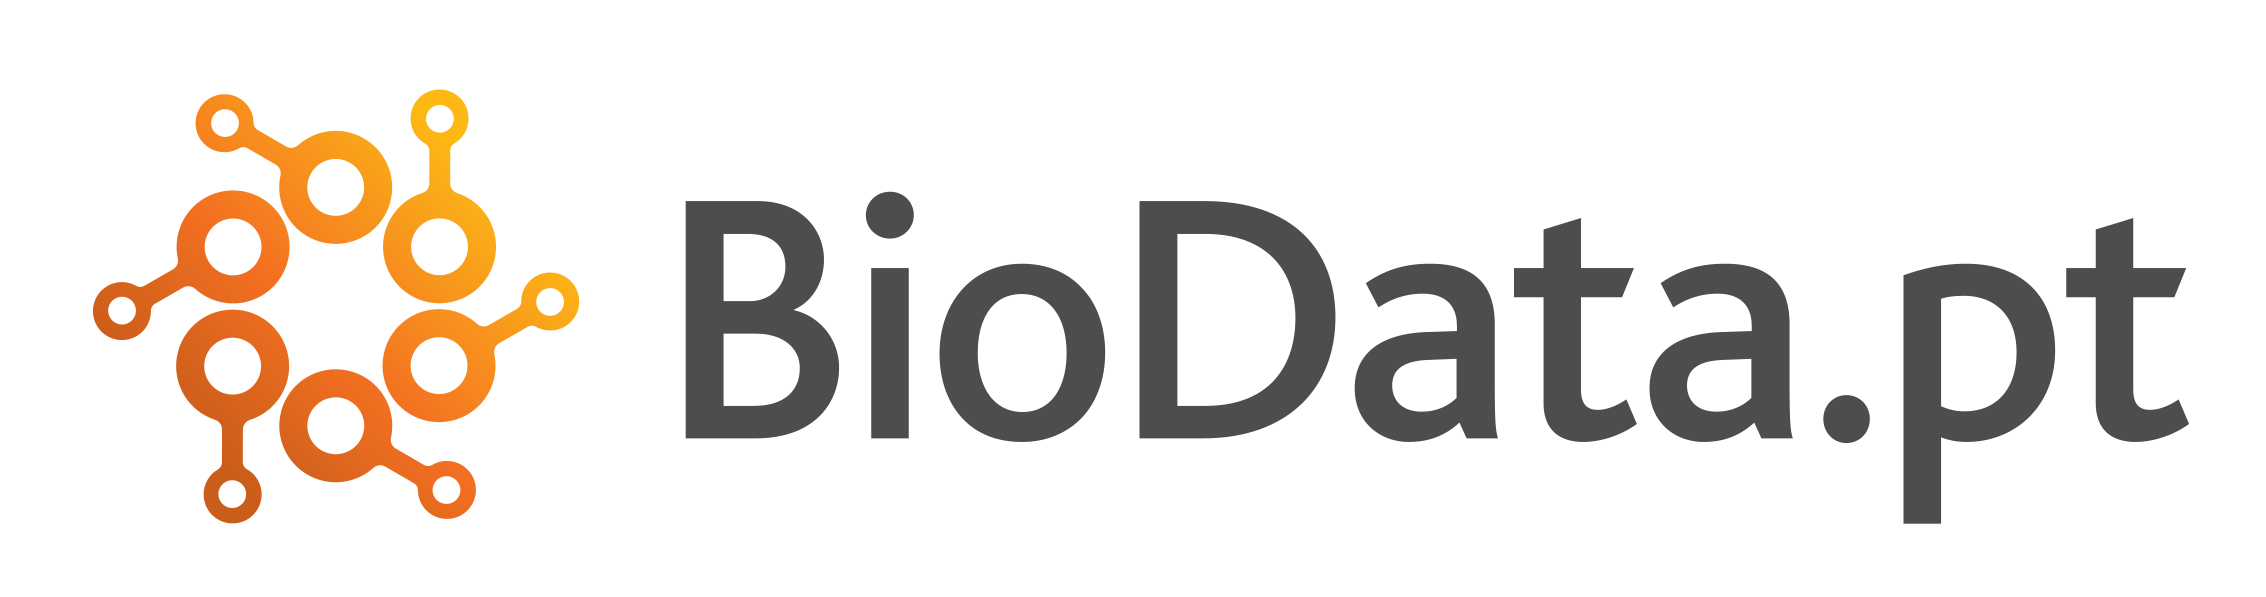 Biodata Logo